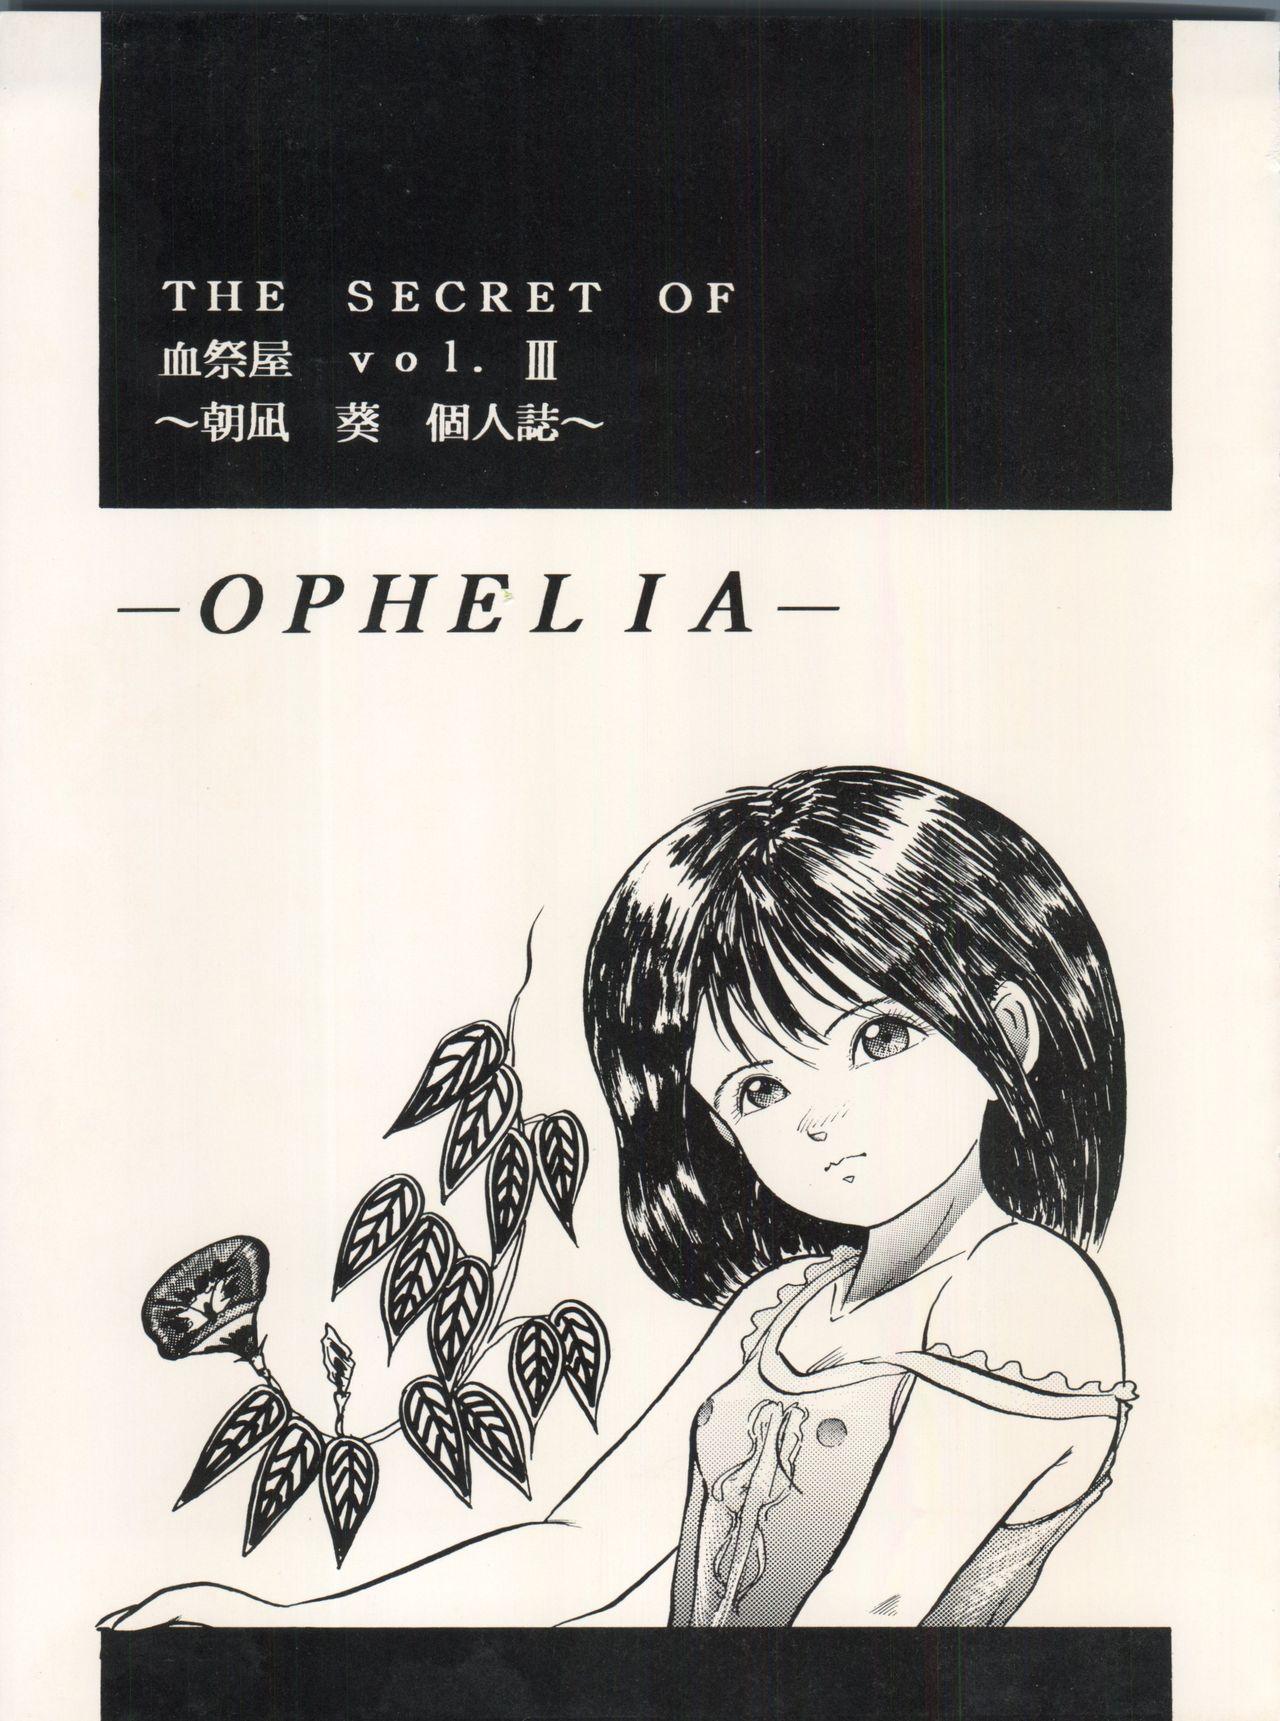 The Secret of Chimatsuriya Vol. III 2